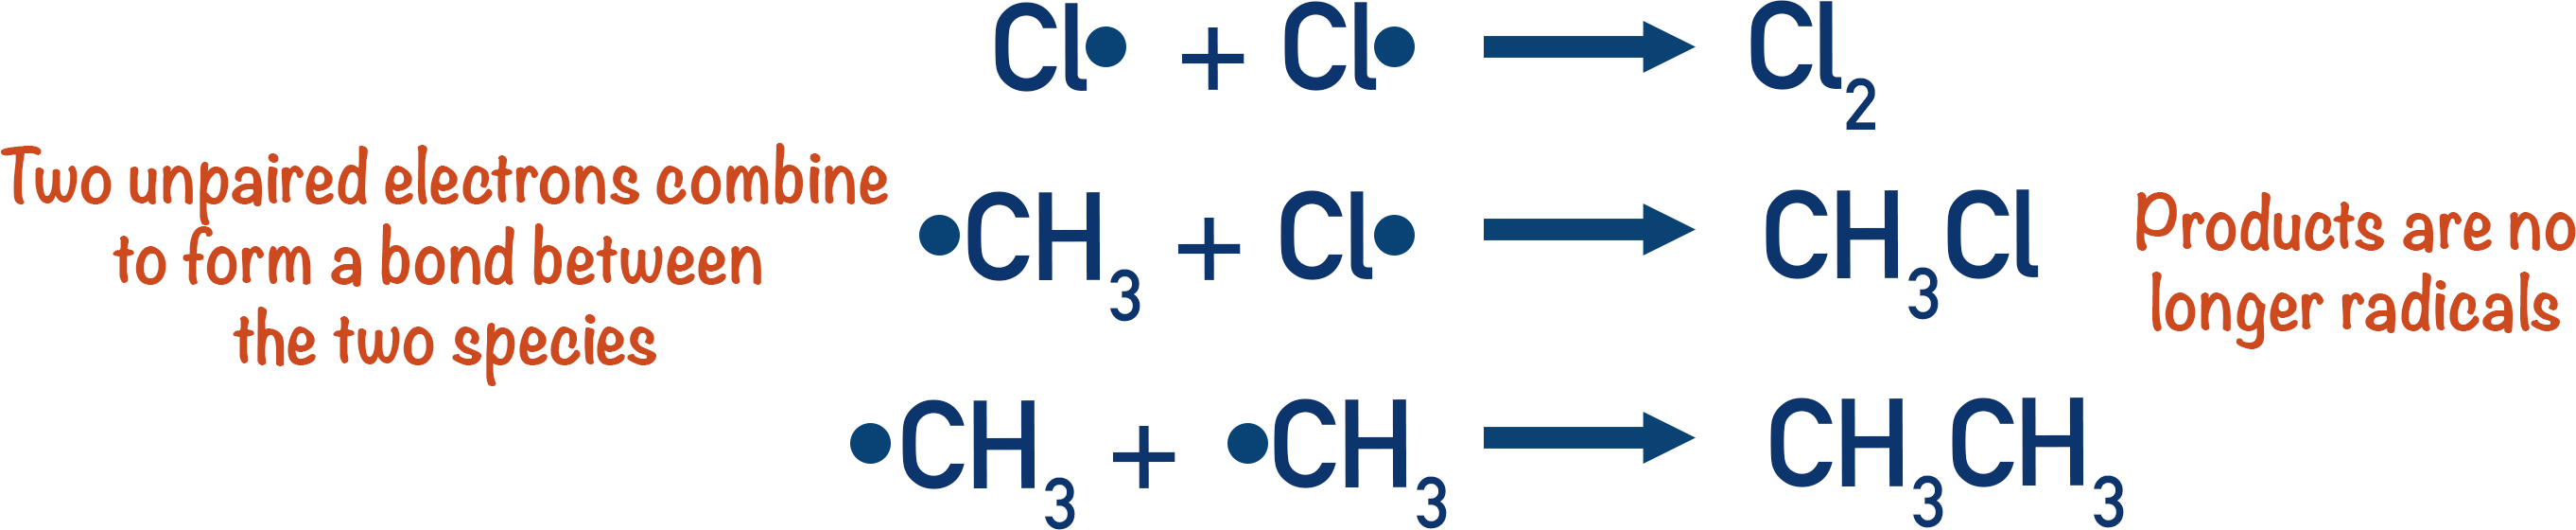 termination step free radical substitution methane and chlorine to form chloromethane uv